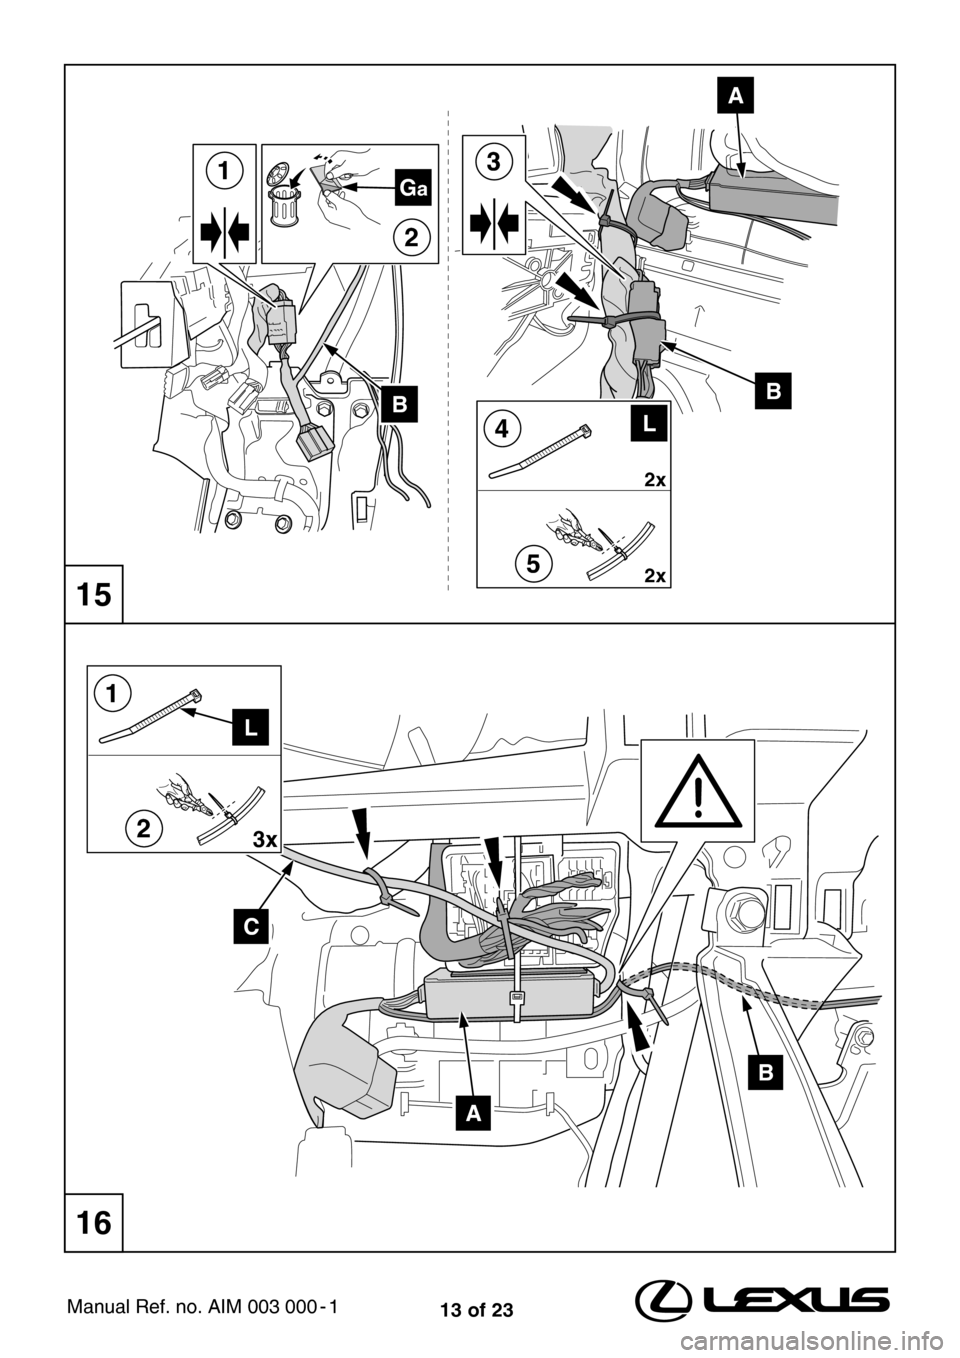 Lexus CT200h 2010  Navigation (LHD) (in English) 13 of 23Manual Ref. no. AIM 003 000 - 1
A
B
5
4
3
B
1
2x
2x
L
Ga
2
B
C
23x
1
L
A
16
15 